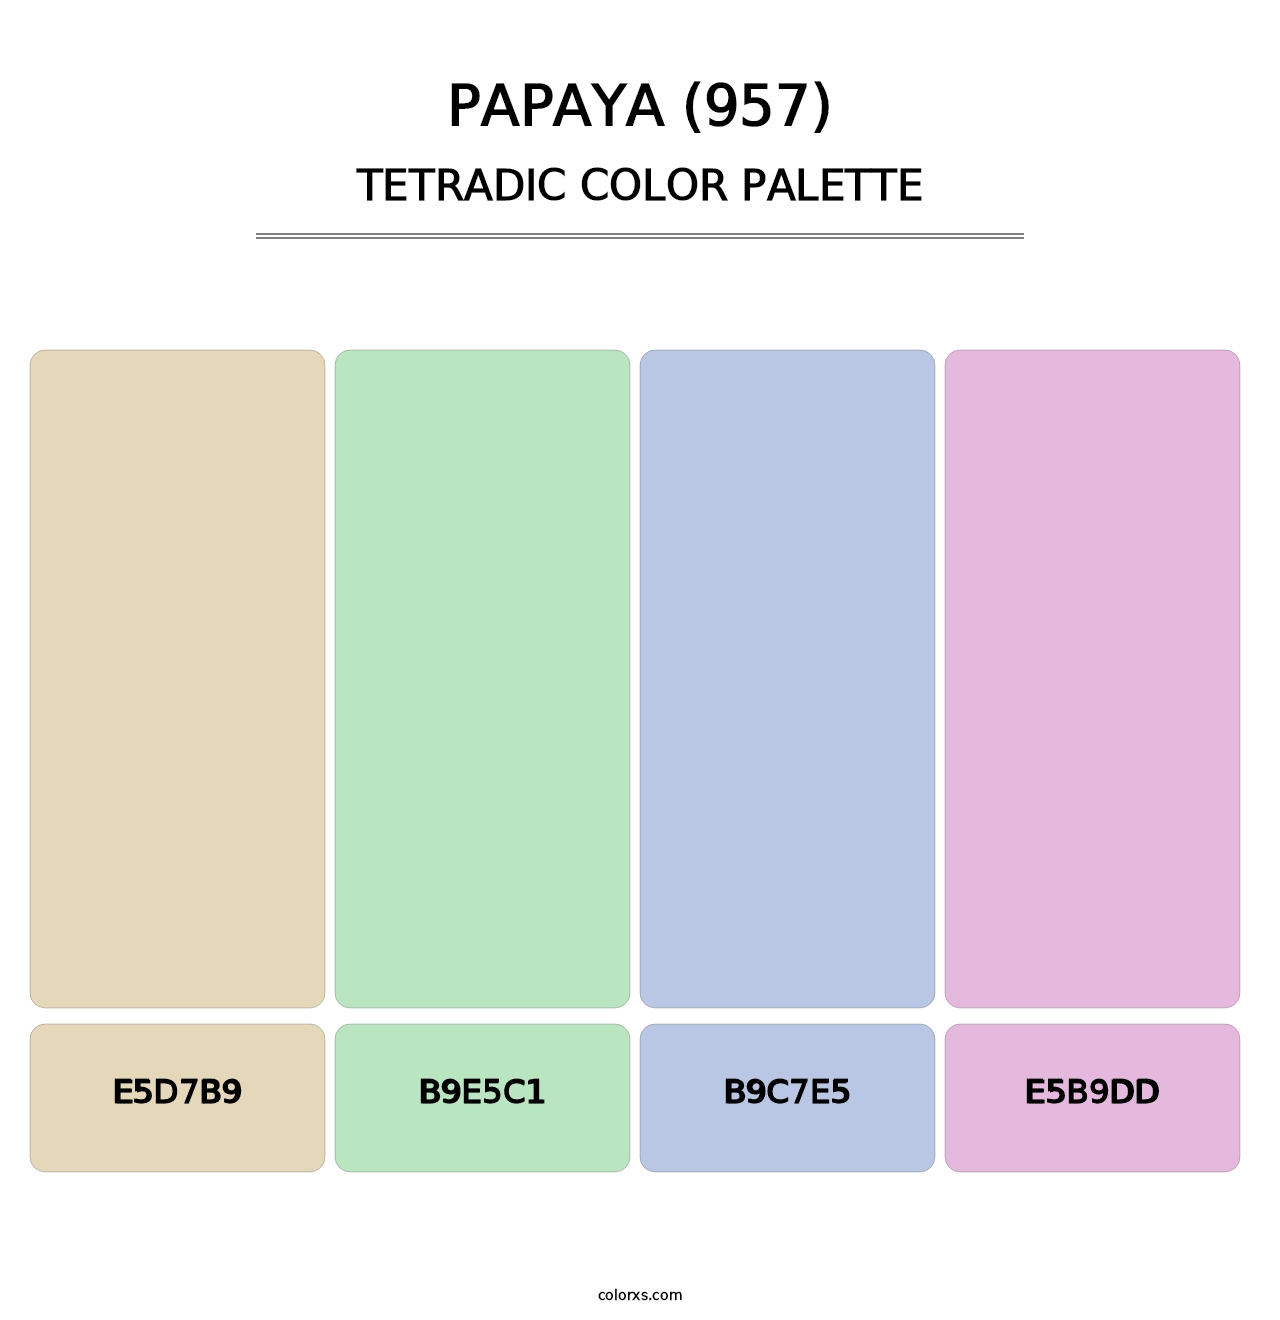 Papaya (957) - Tetradic Color Palette